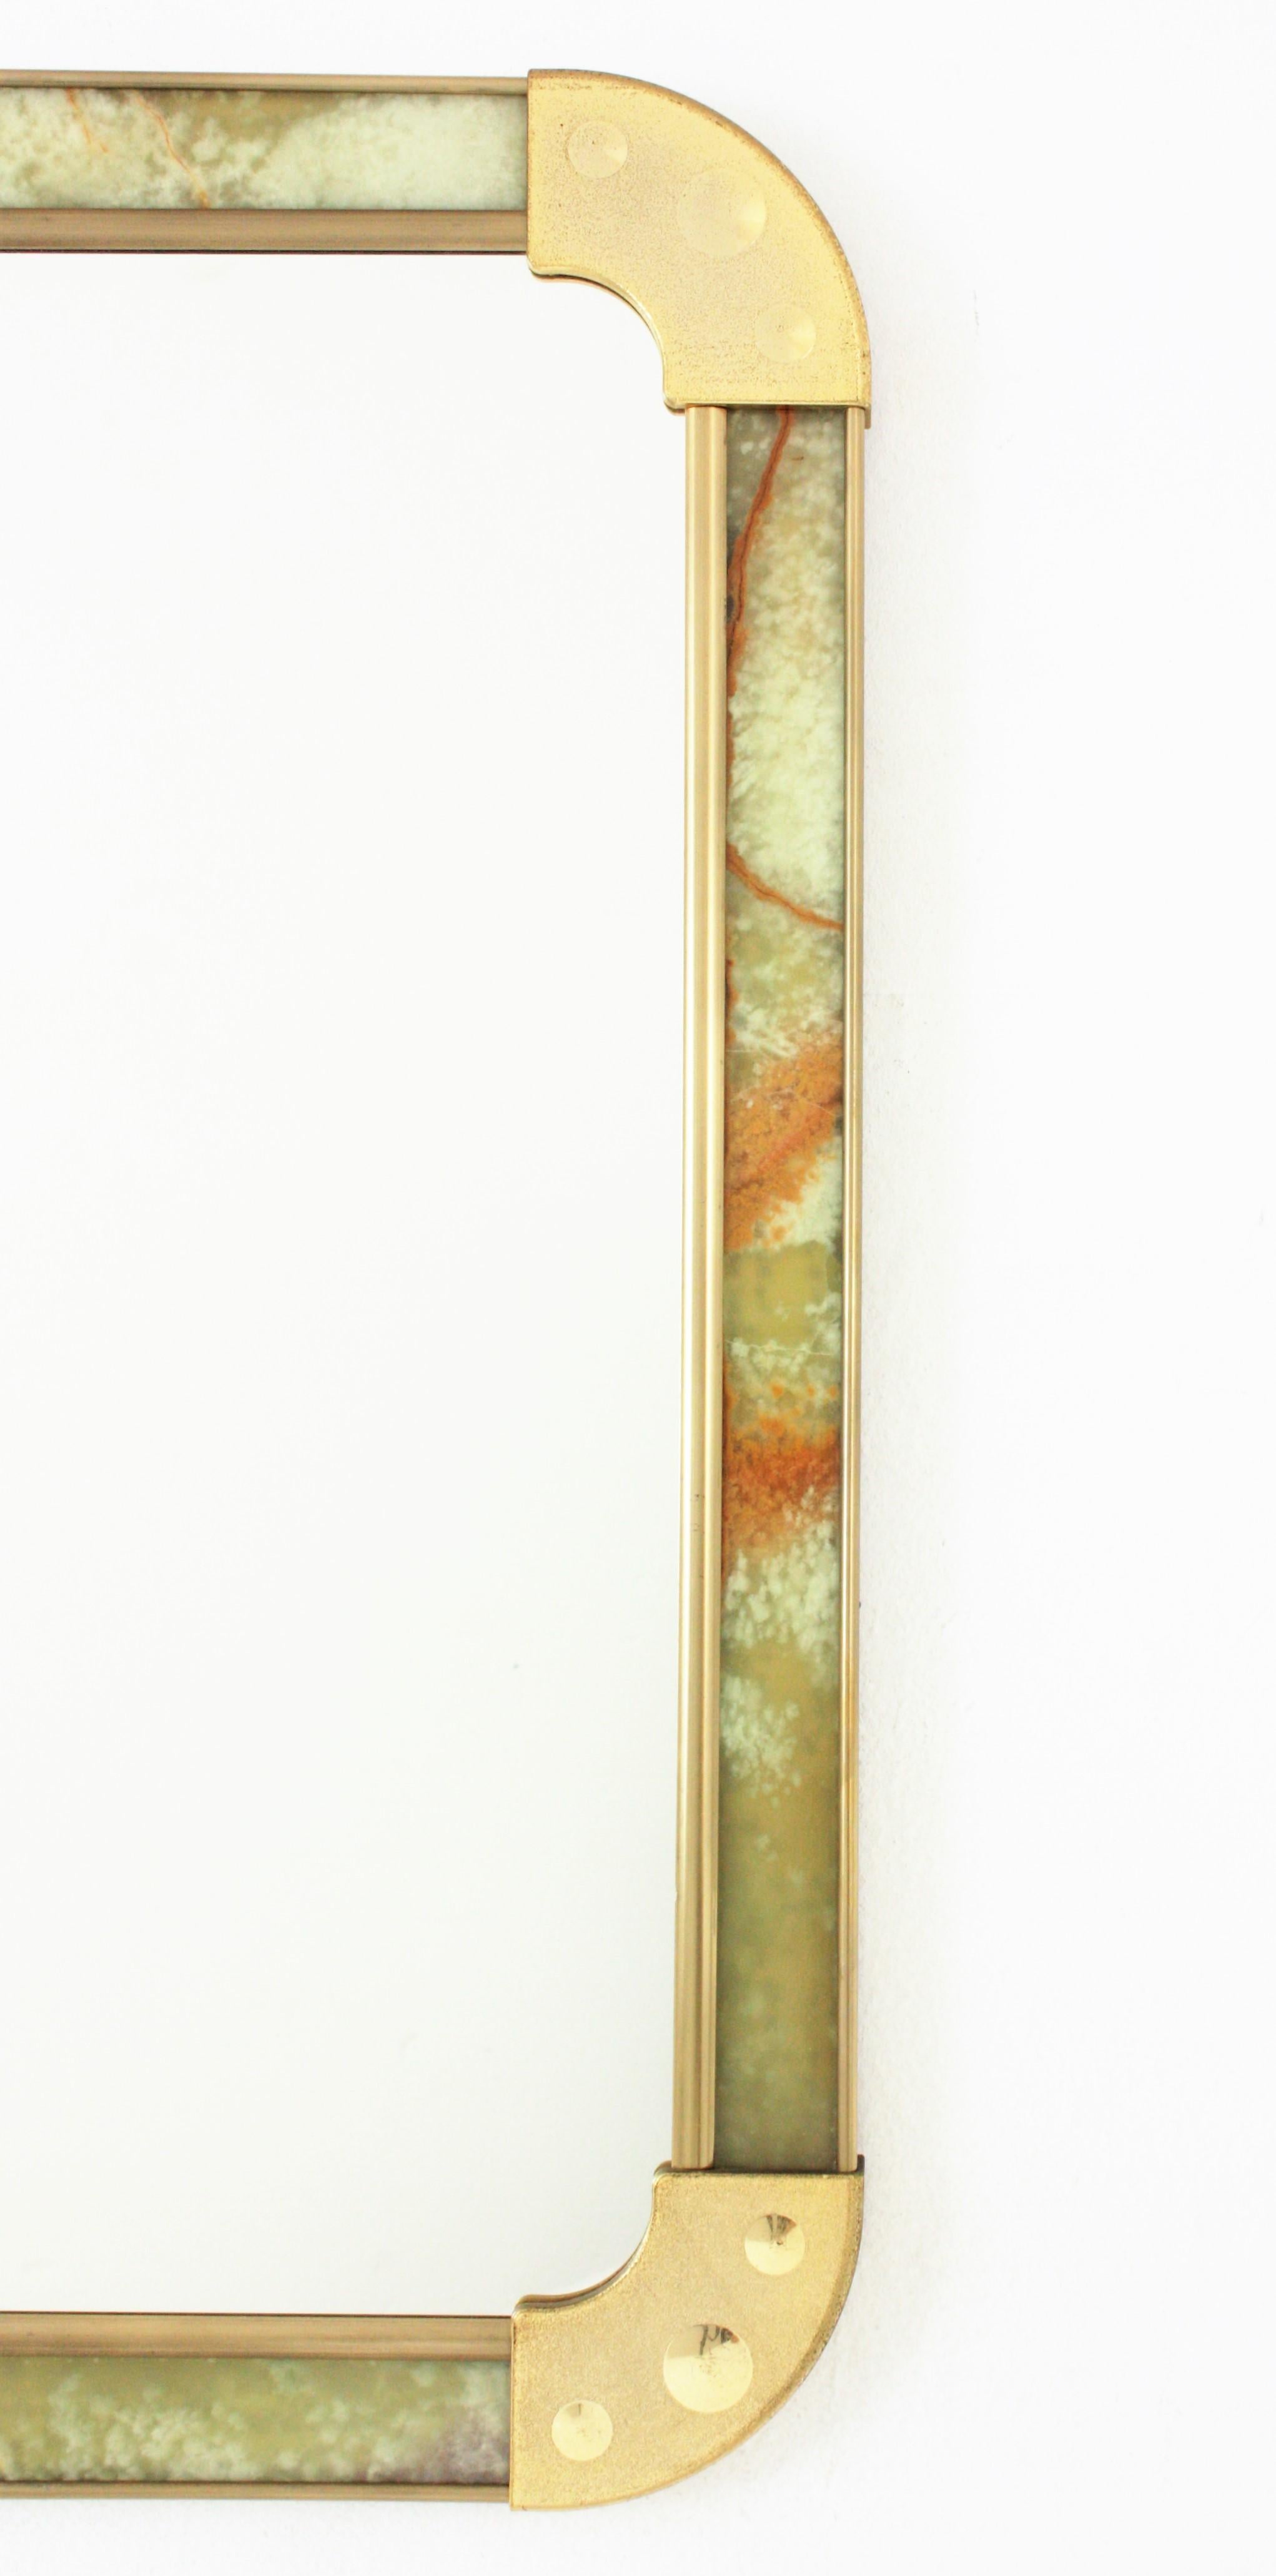 Stone Midcentury Rectangular Mirror in Onyx, 1960s For Sale